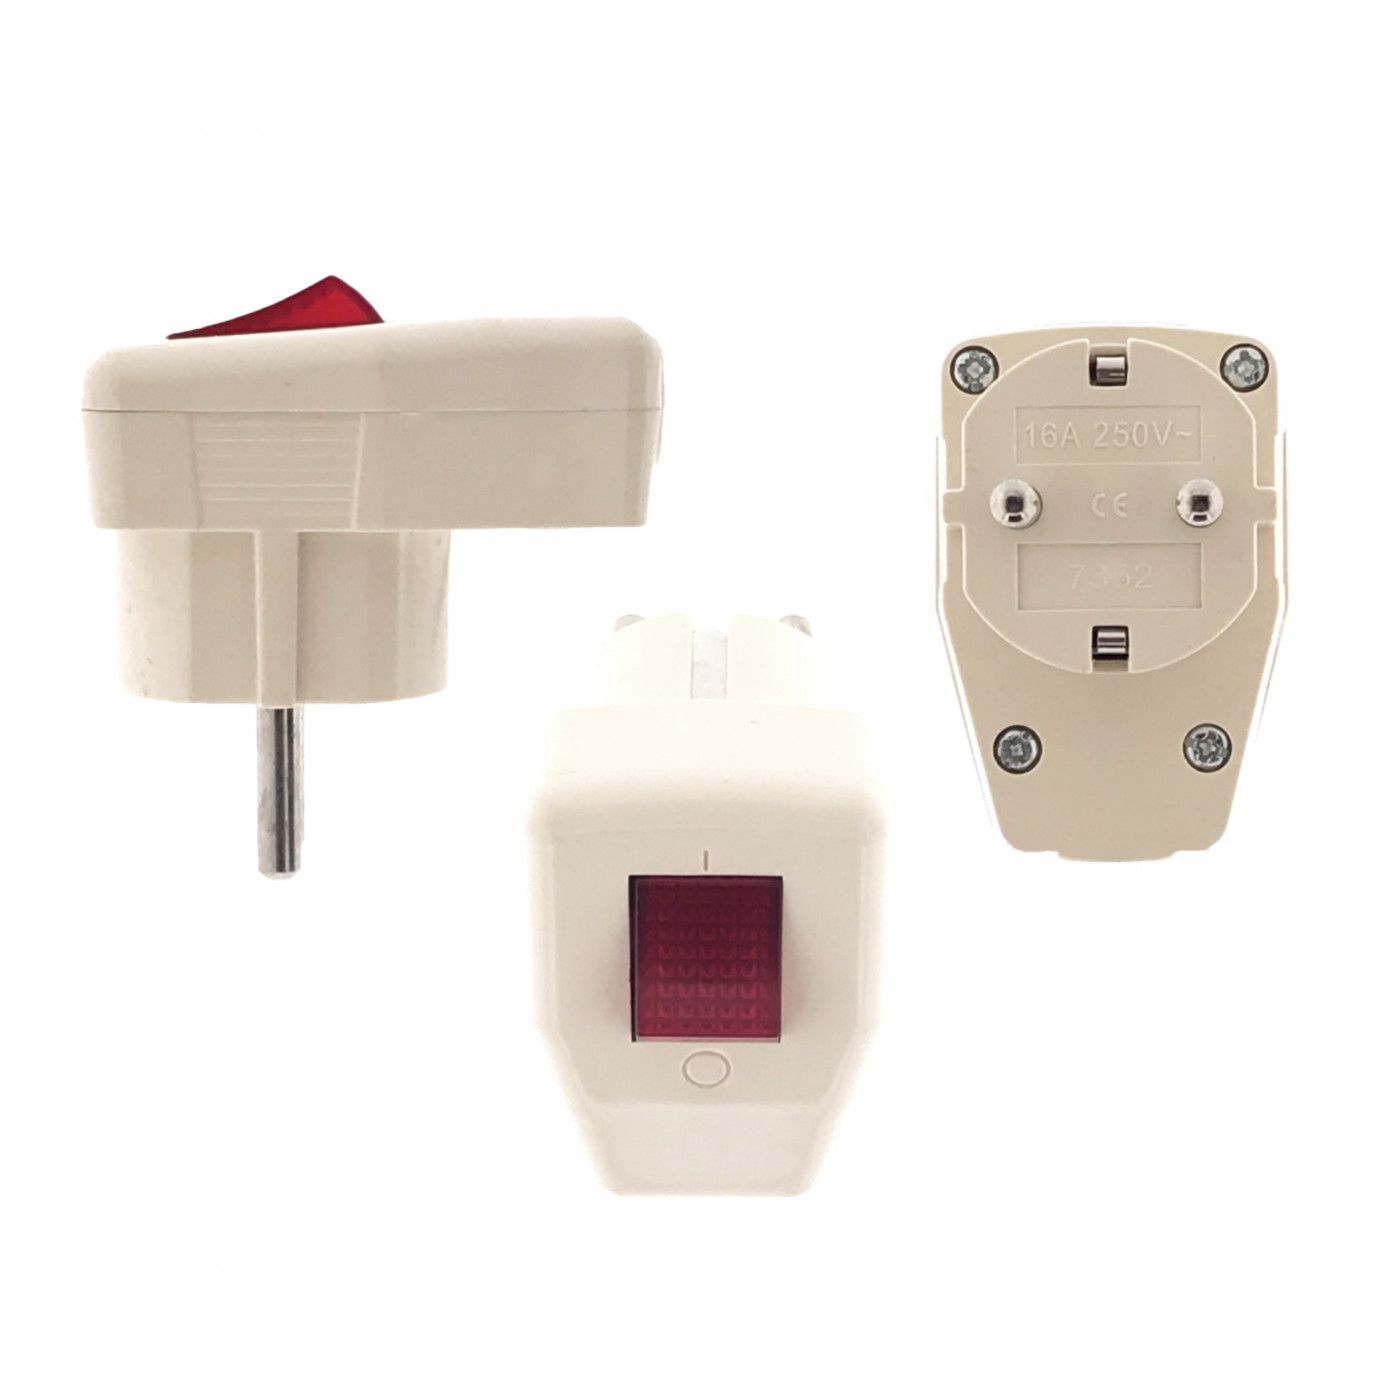 Loose wall plug for self-mounting (230V, 16A, color: cream)